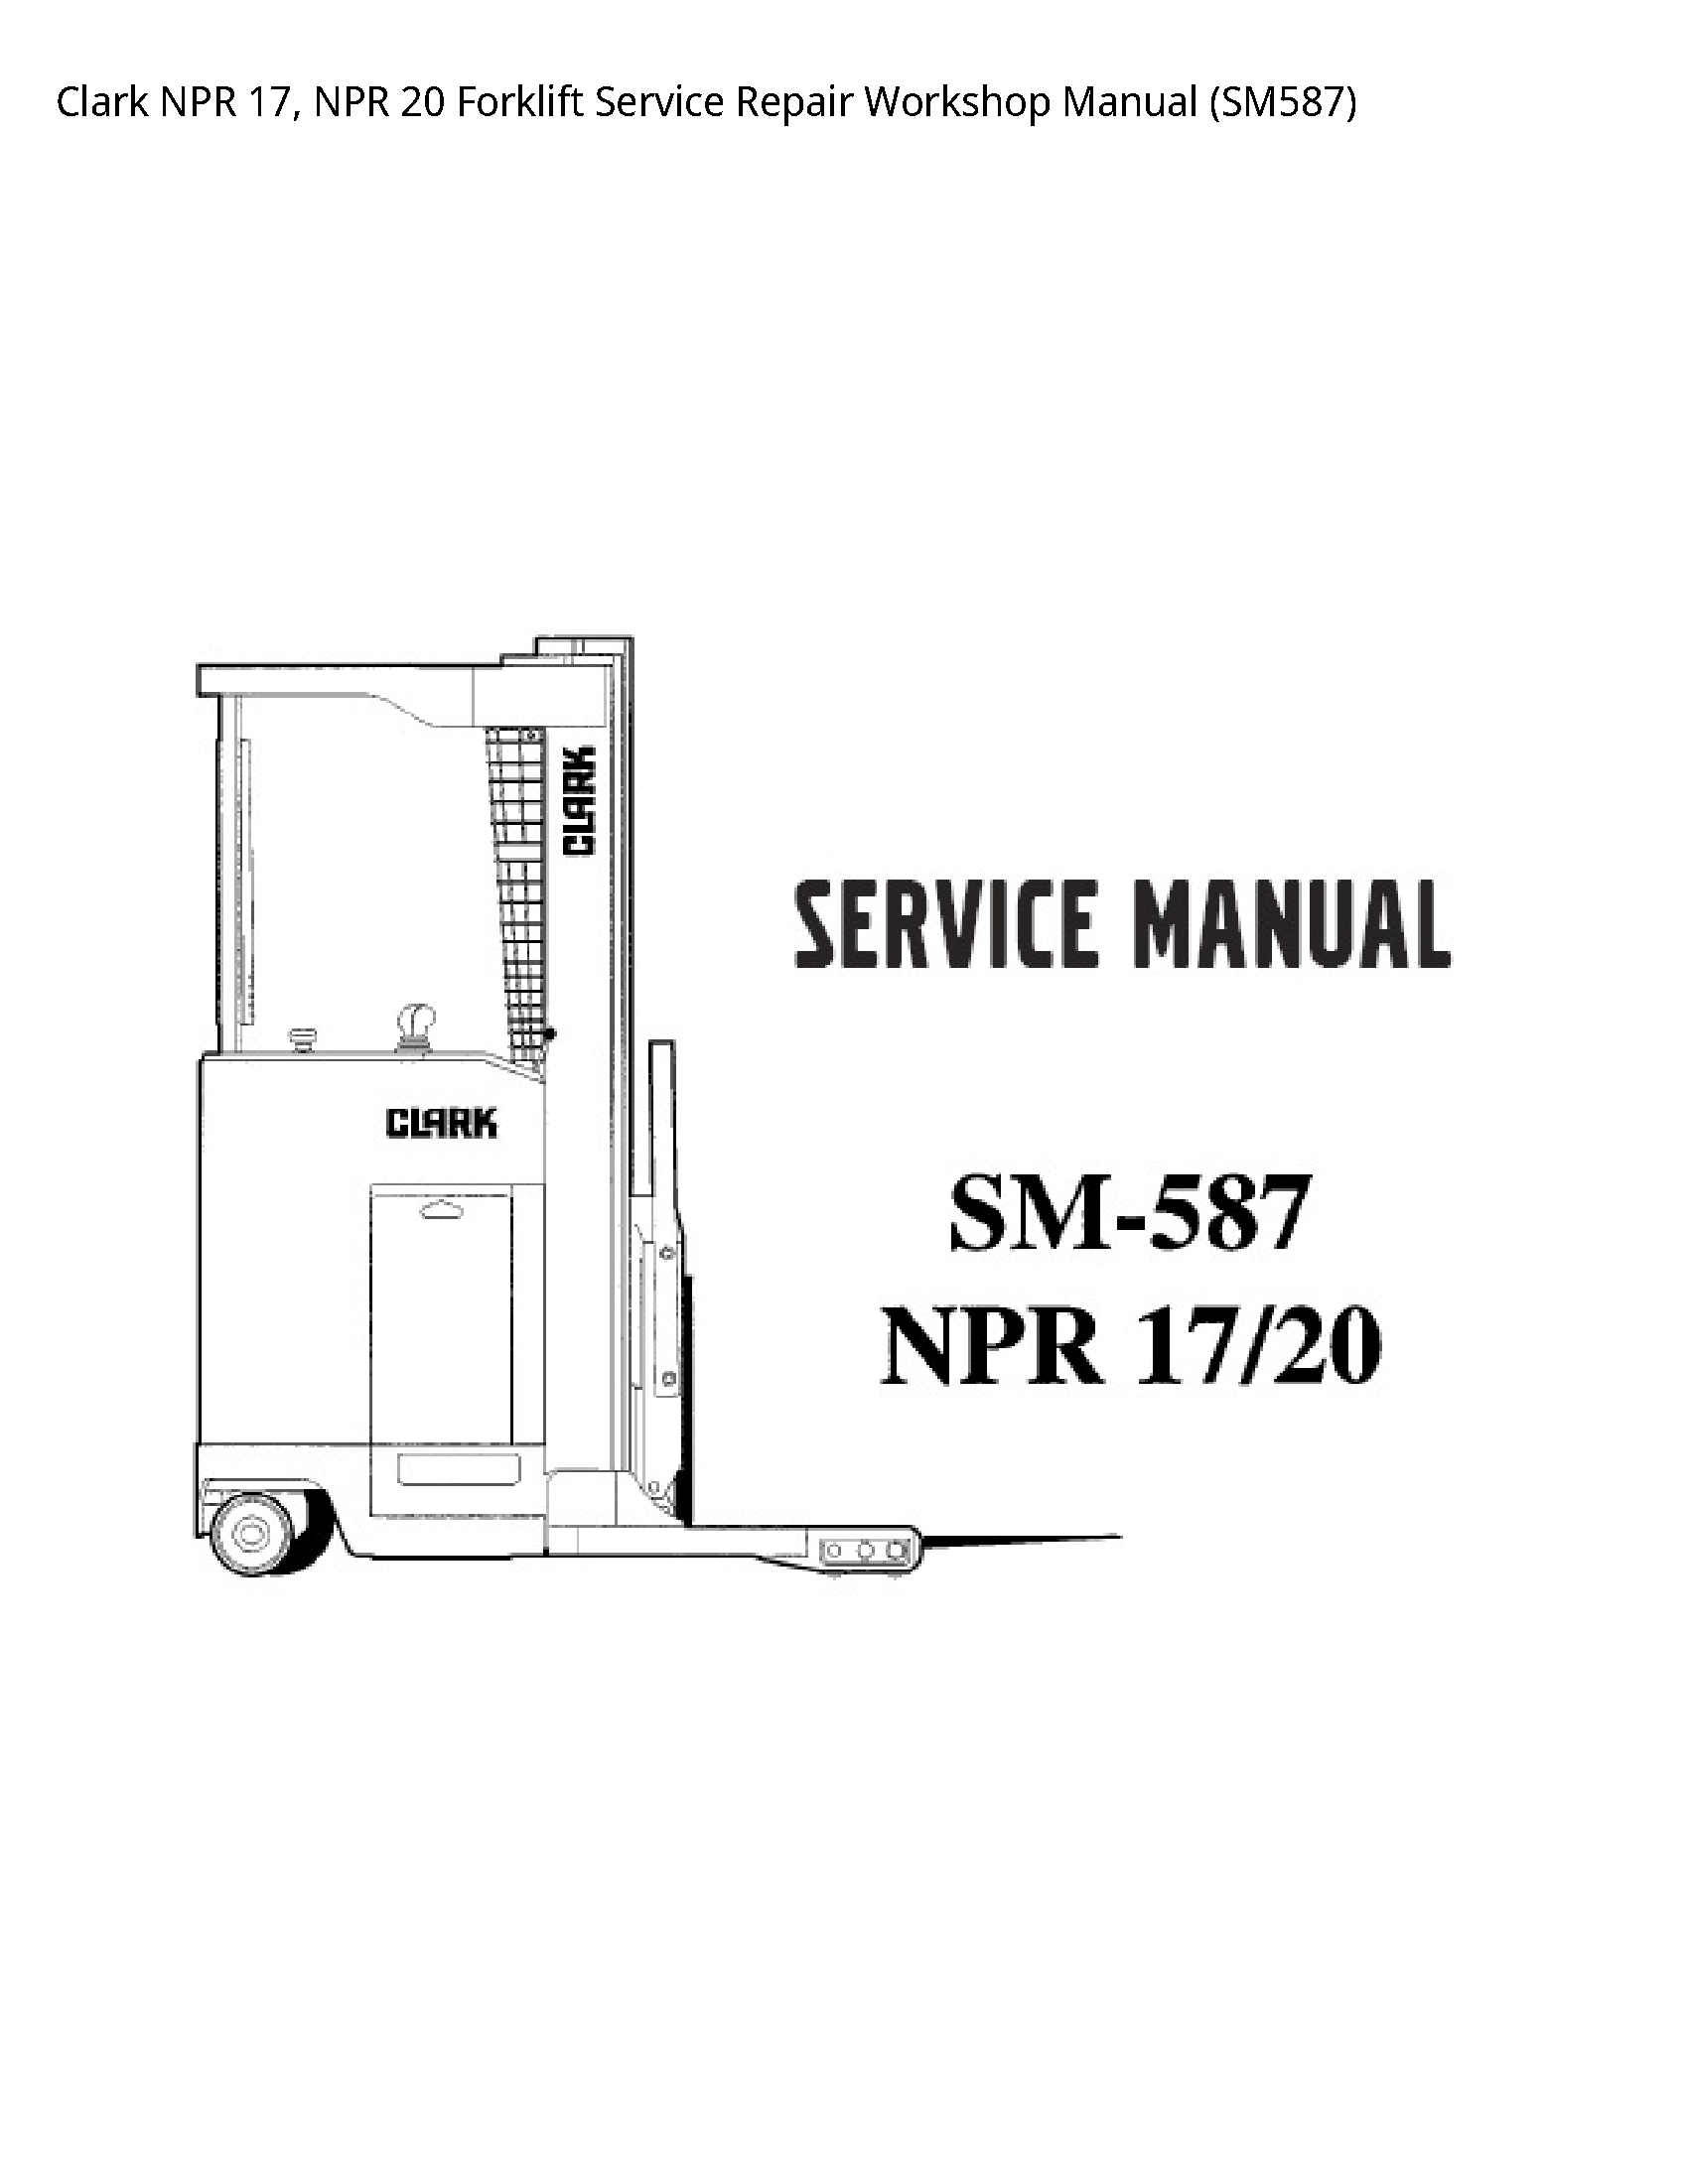 Clark 17 NPR NPR Forklift manual